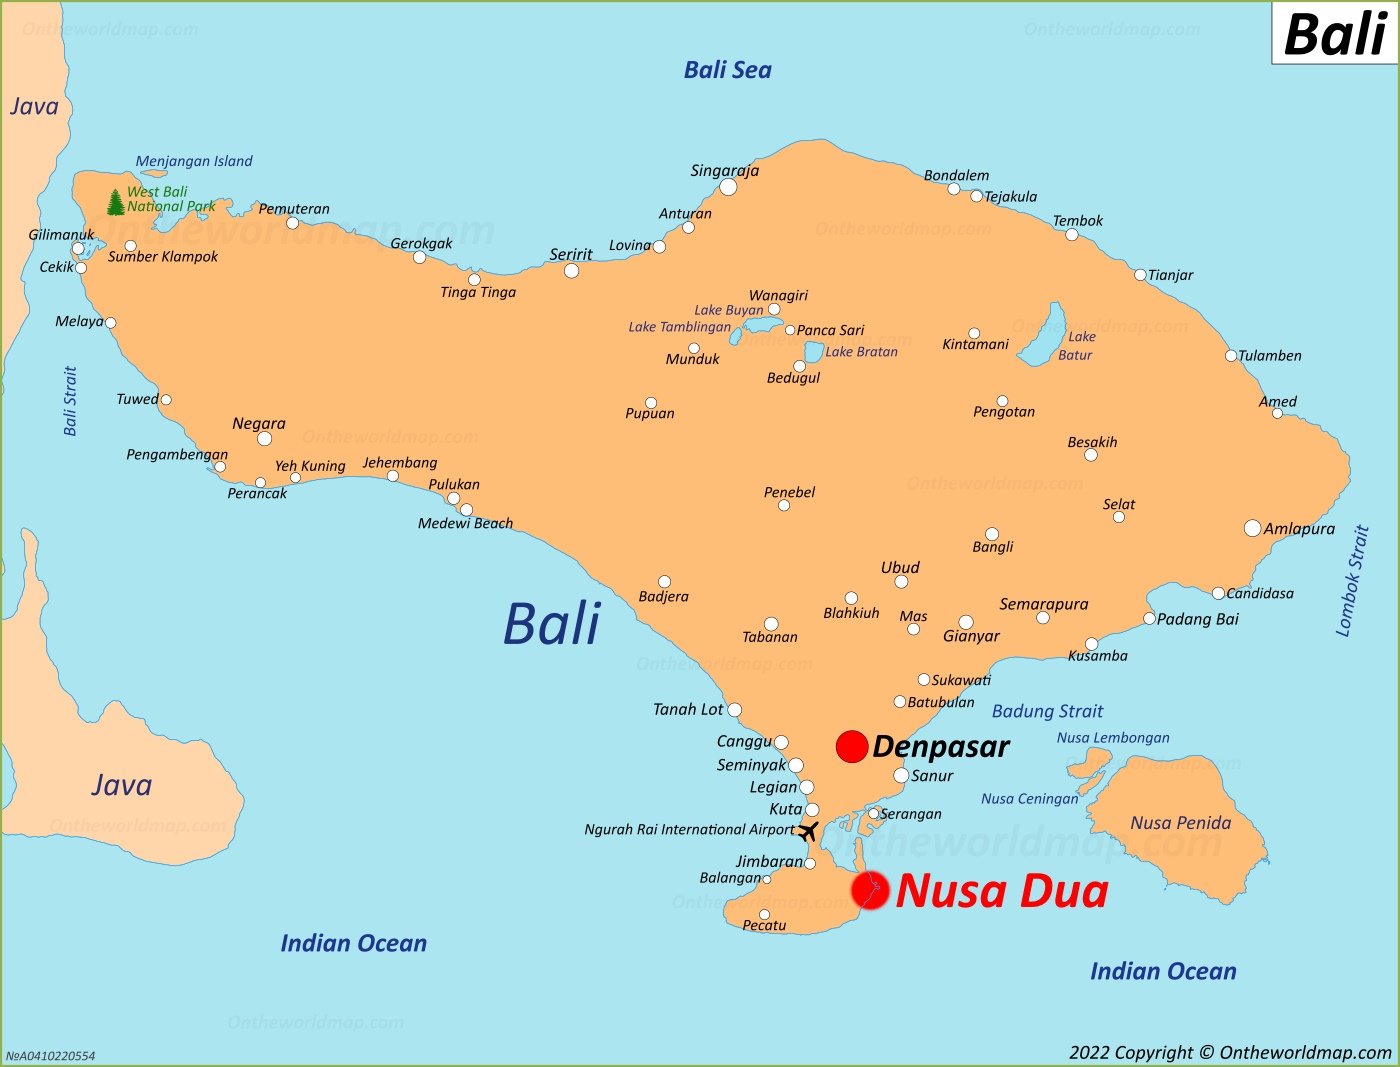 Nusa Dua Location On The Bali Map